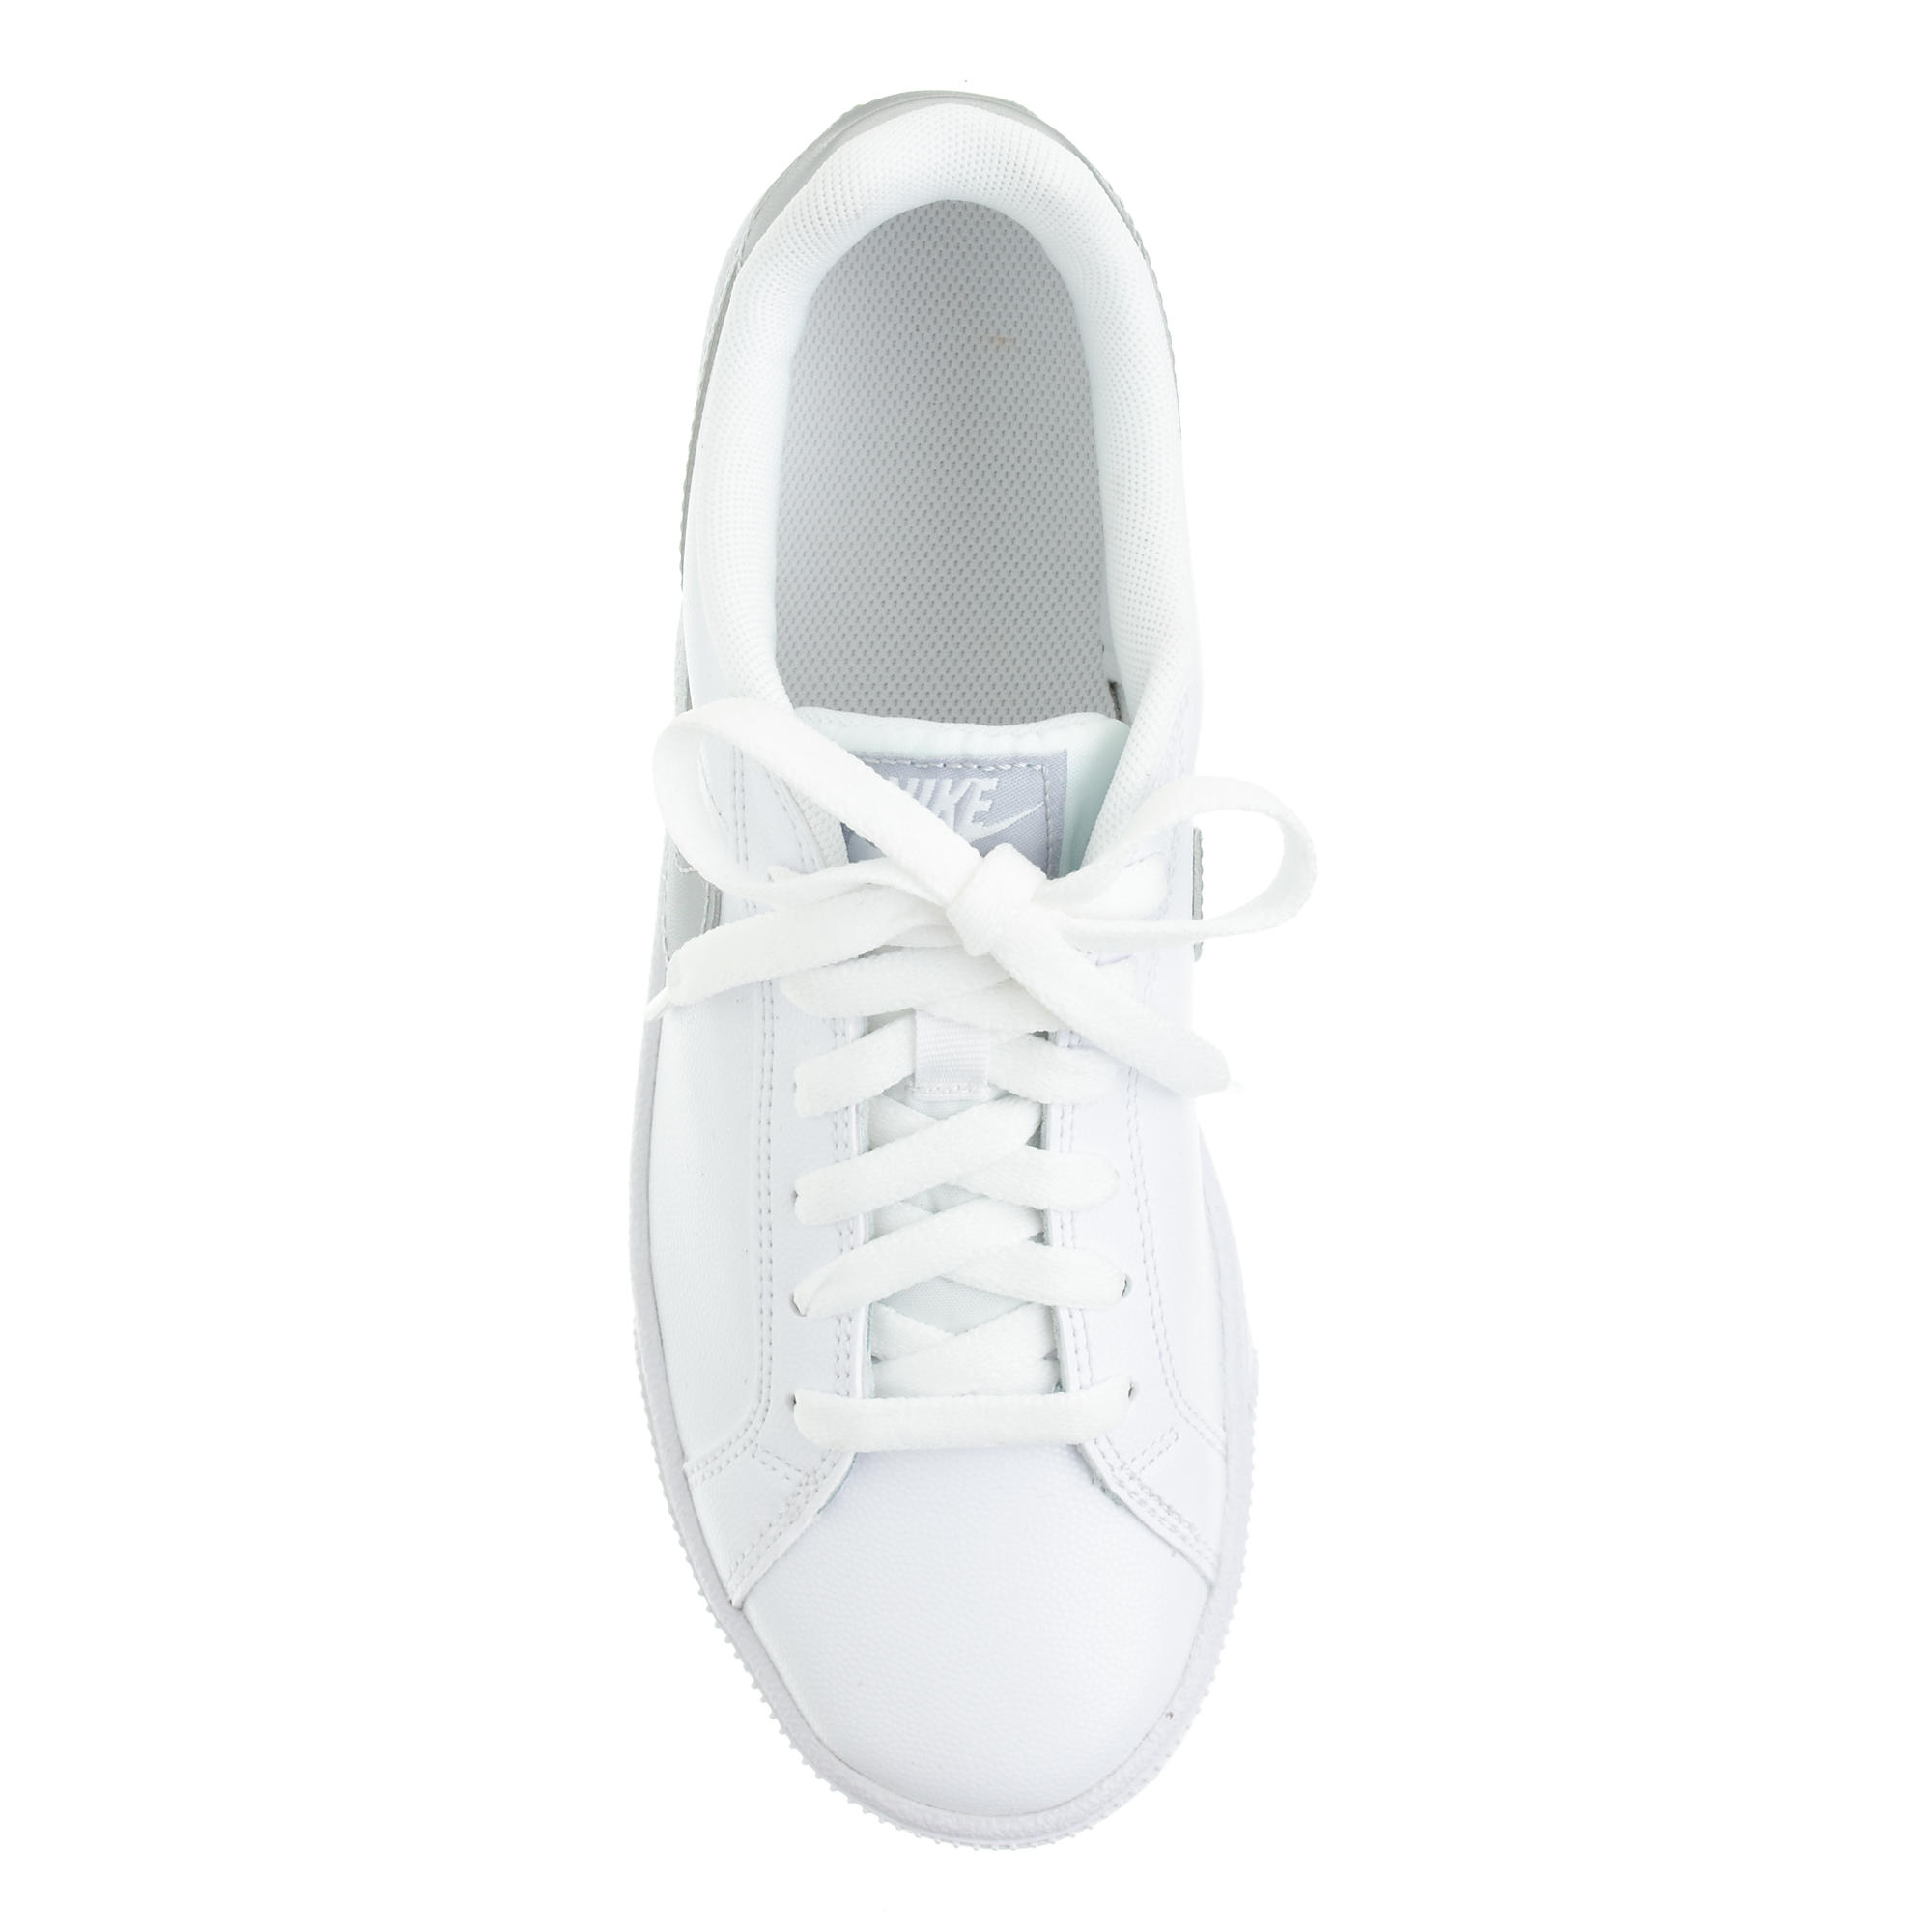 Lyst - J.Crew Women's Nike Court Majestic Sneakers in White